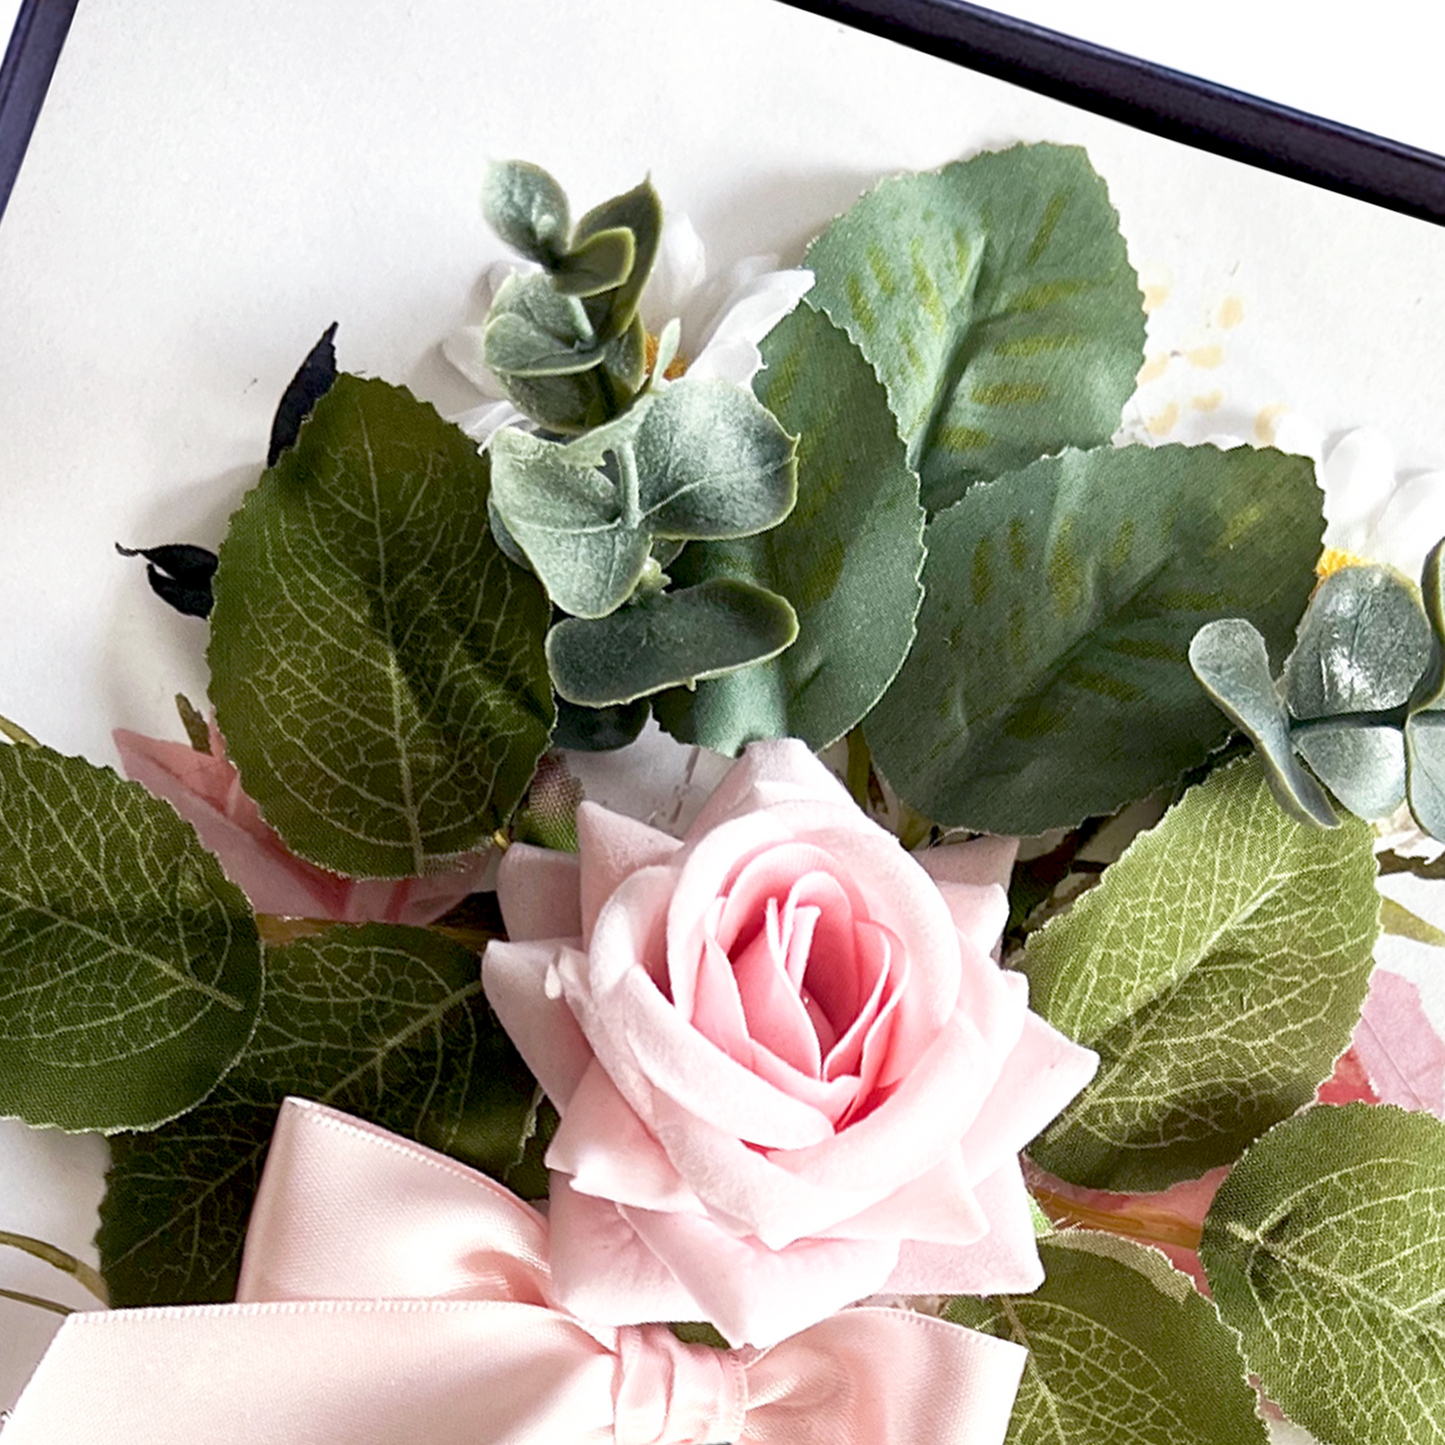 Scented blush rose bouquet handmade wedding card